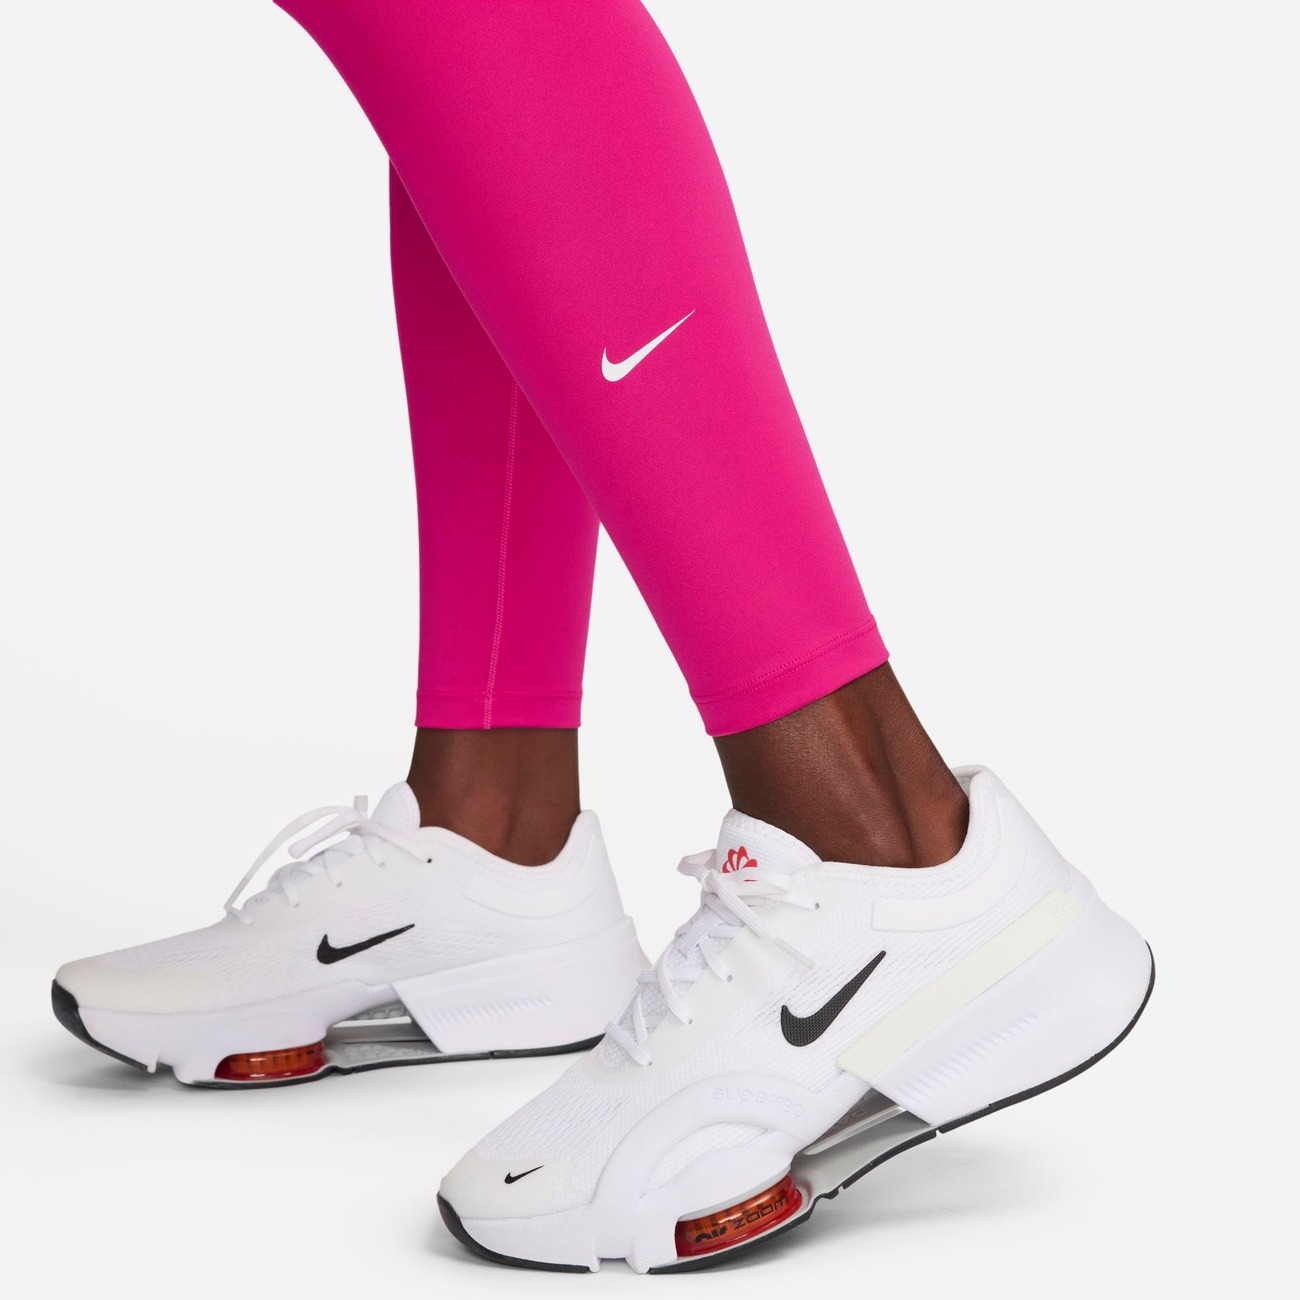 Calca Legging Nike One Feminina Nike - Lillean